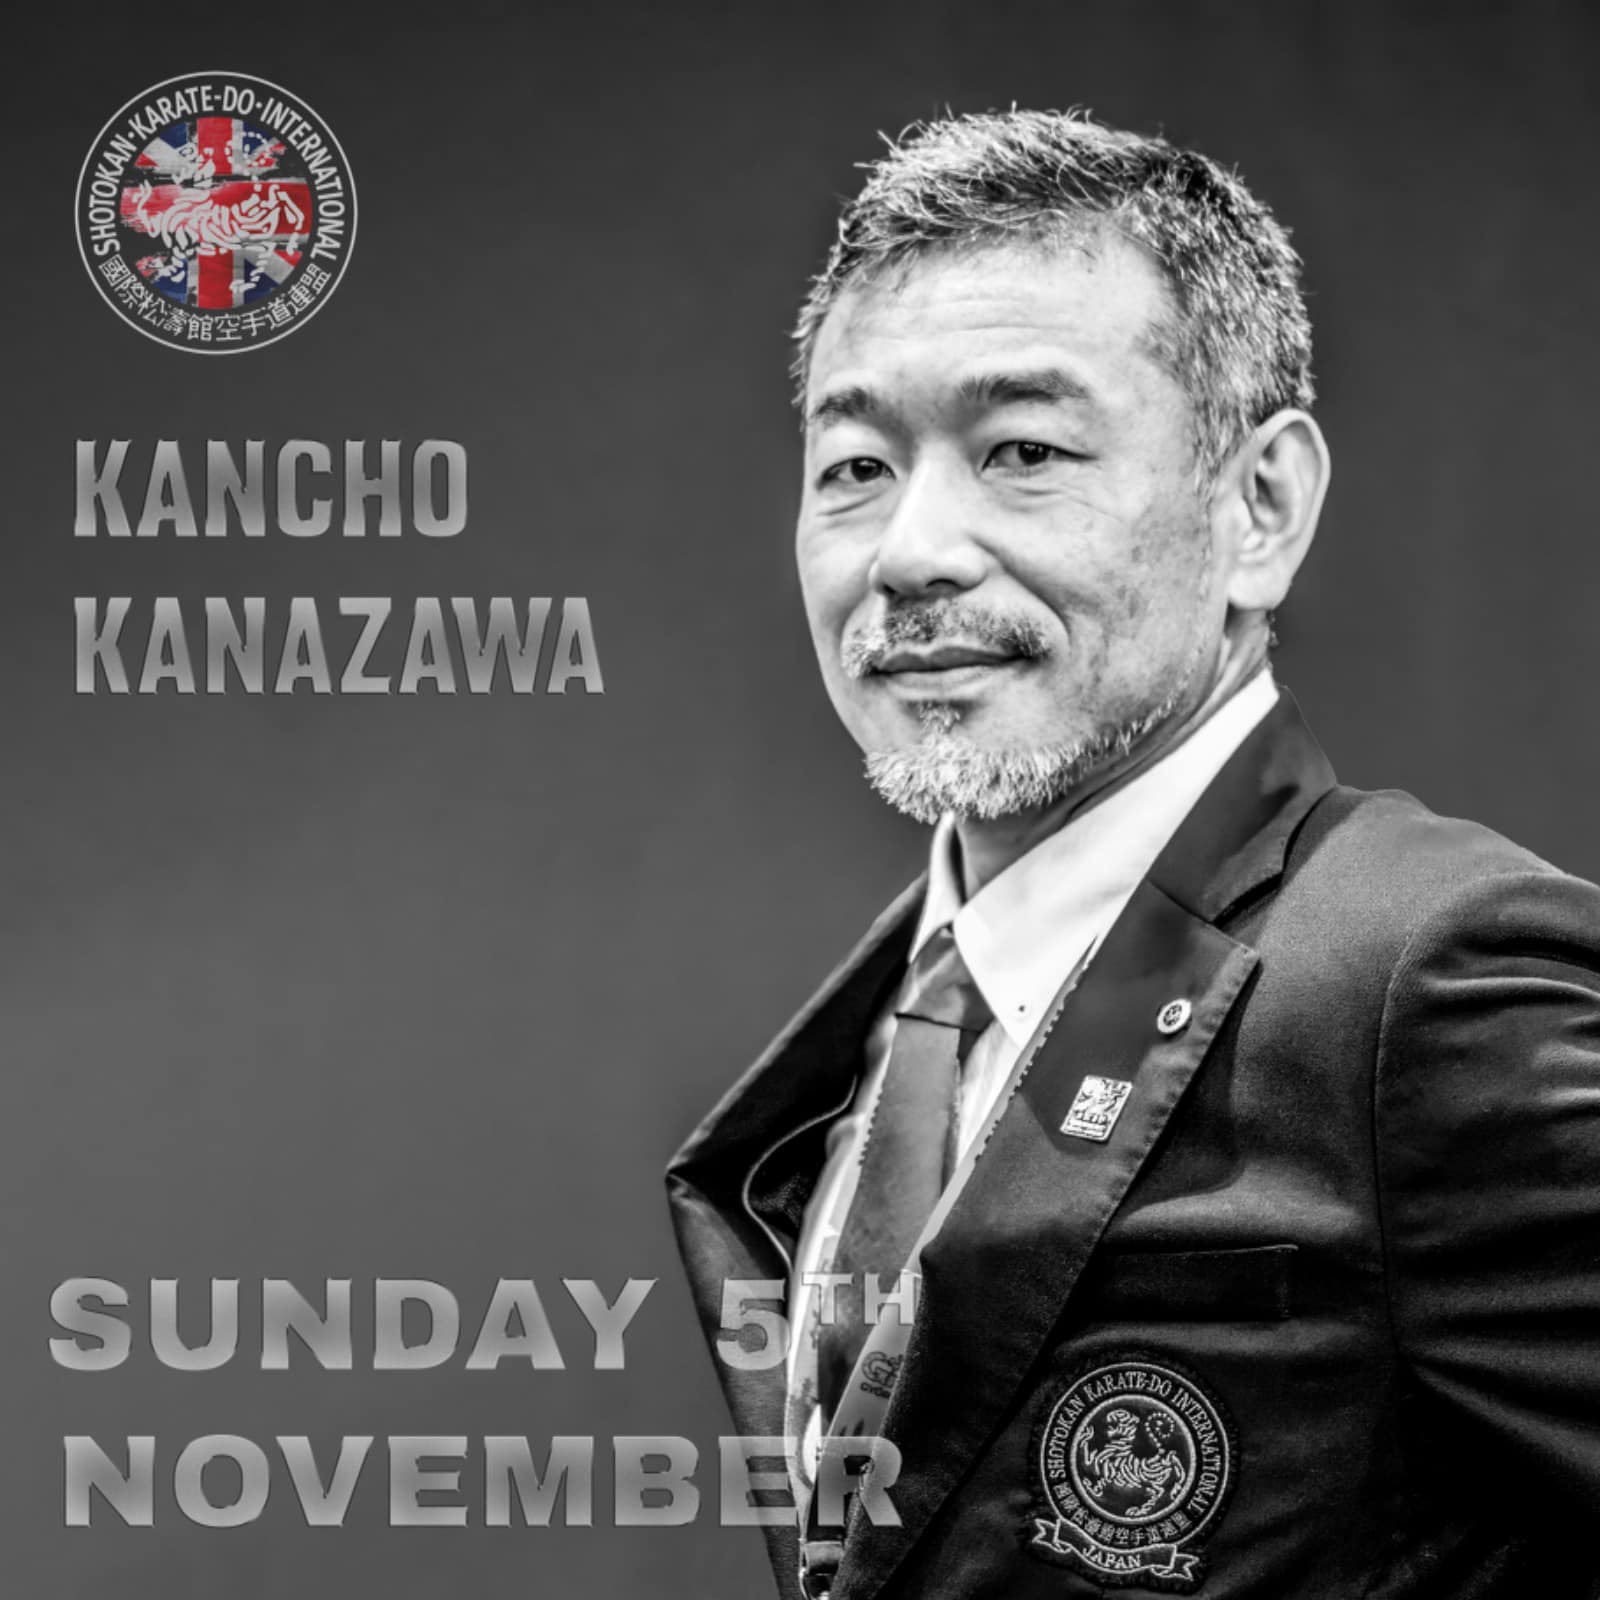 SKIF Great Britain - Kancho Nobuaki Kanazawa